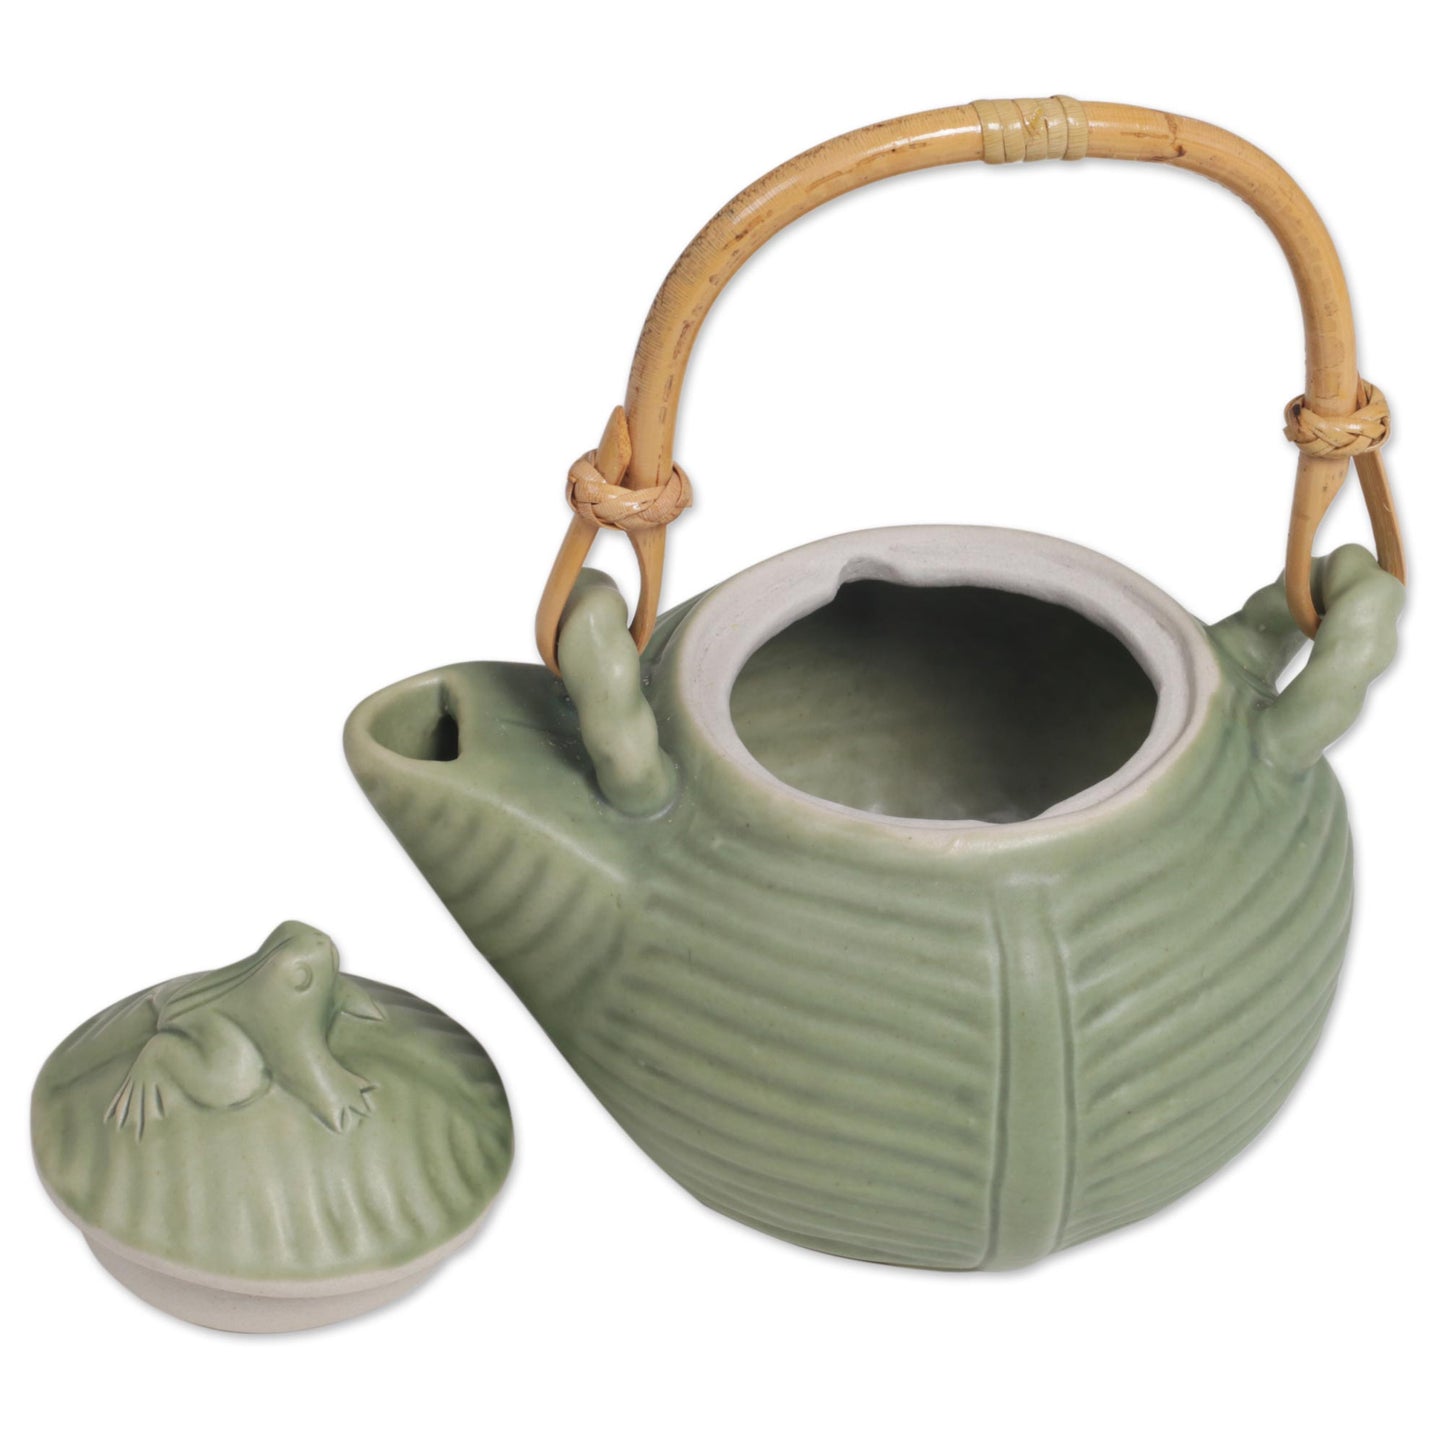 Banana Frog Hand Crafted Green Ceramic Frog Motif Teapot